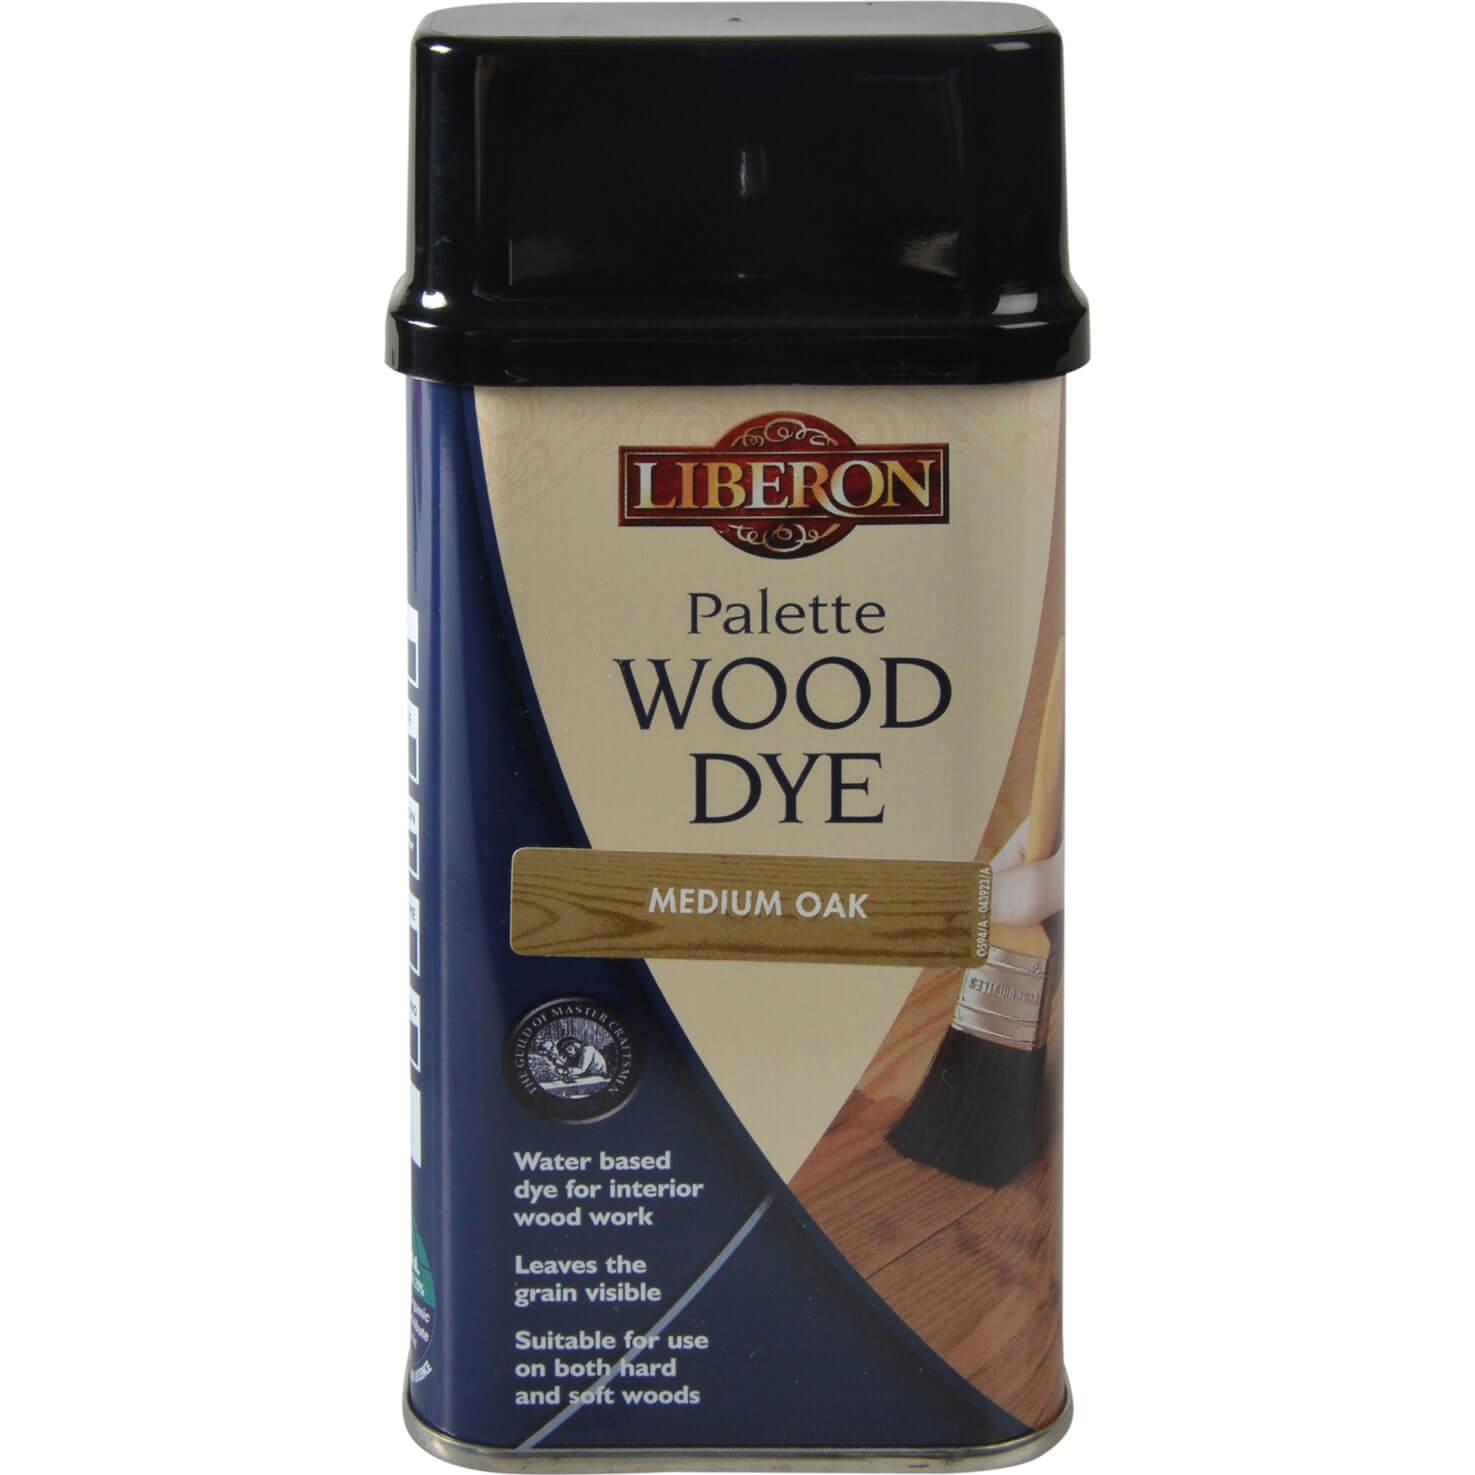 Image of Liberon Palette Wood Dye Medium Oak 250ml